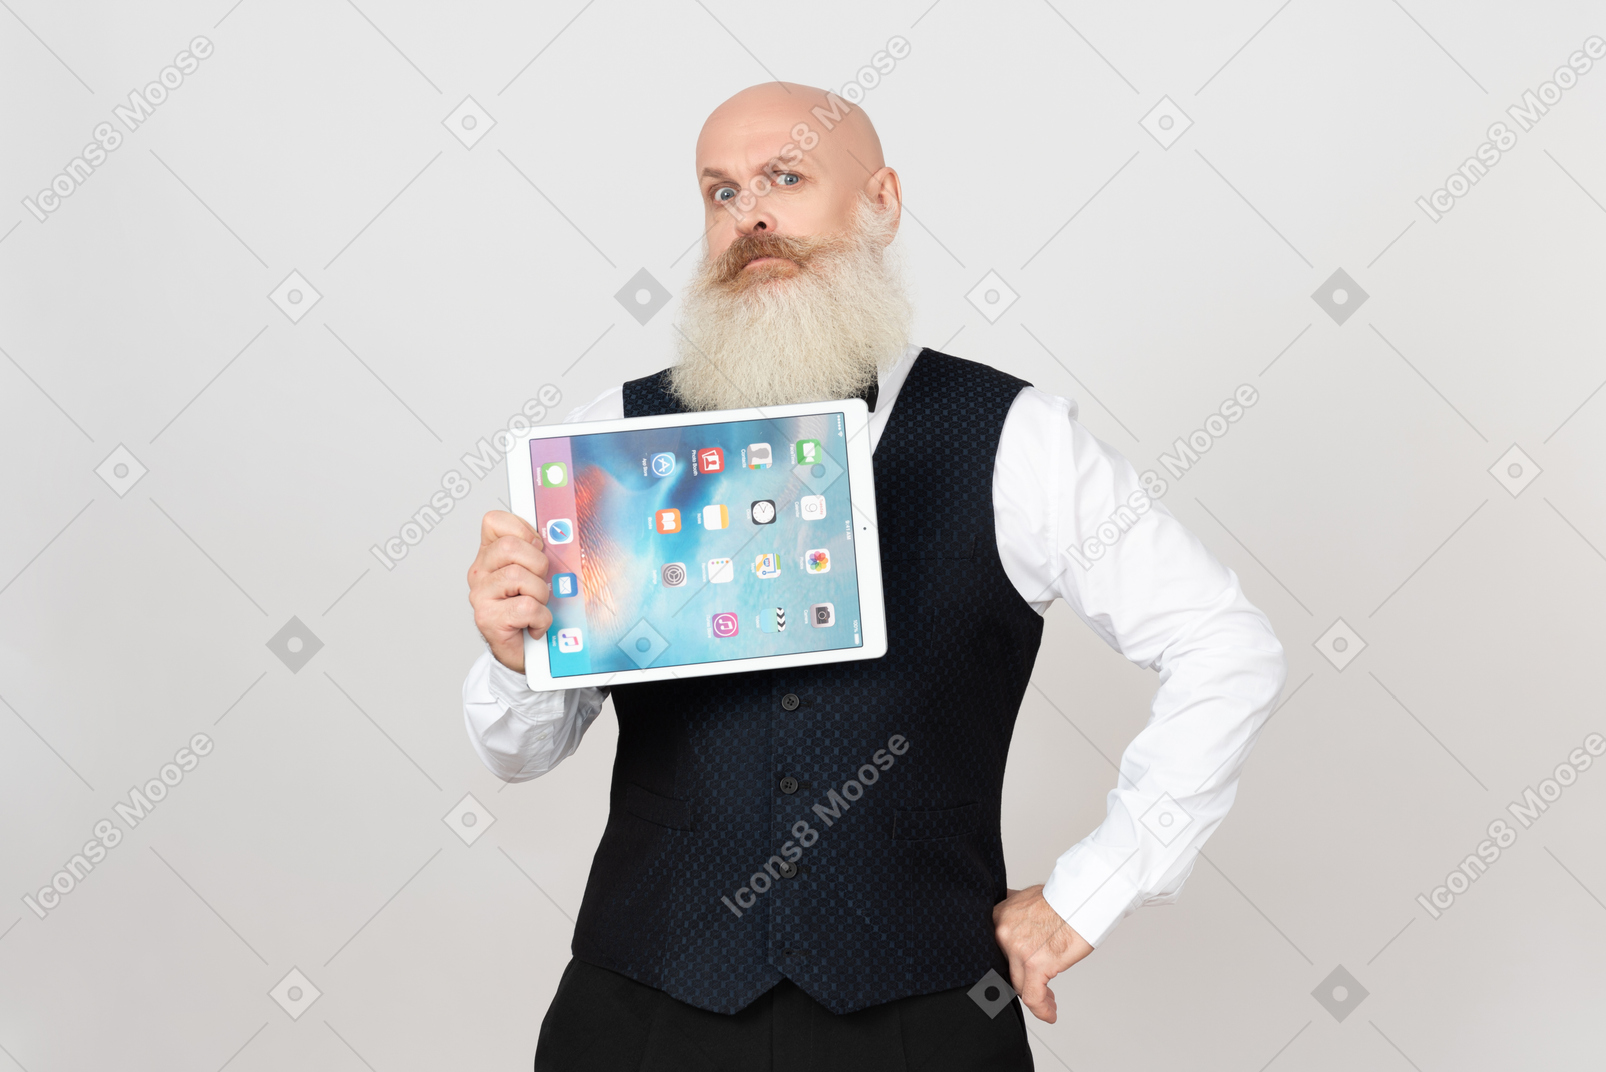 Pensive aged man holding ipad